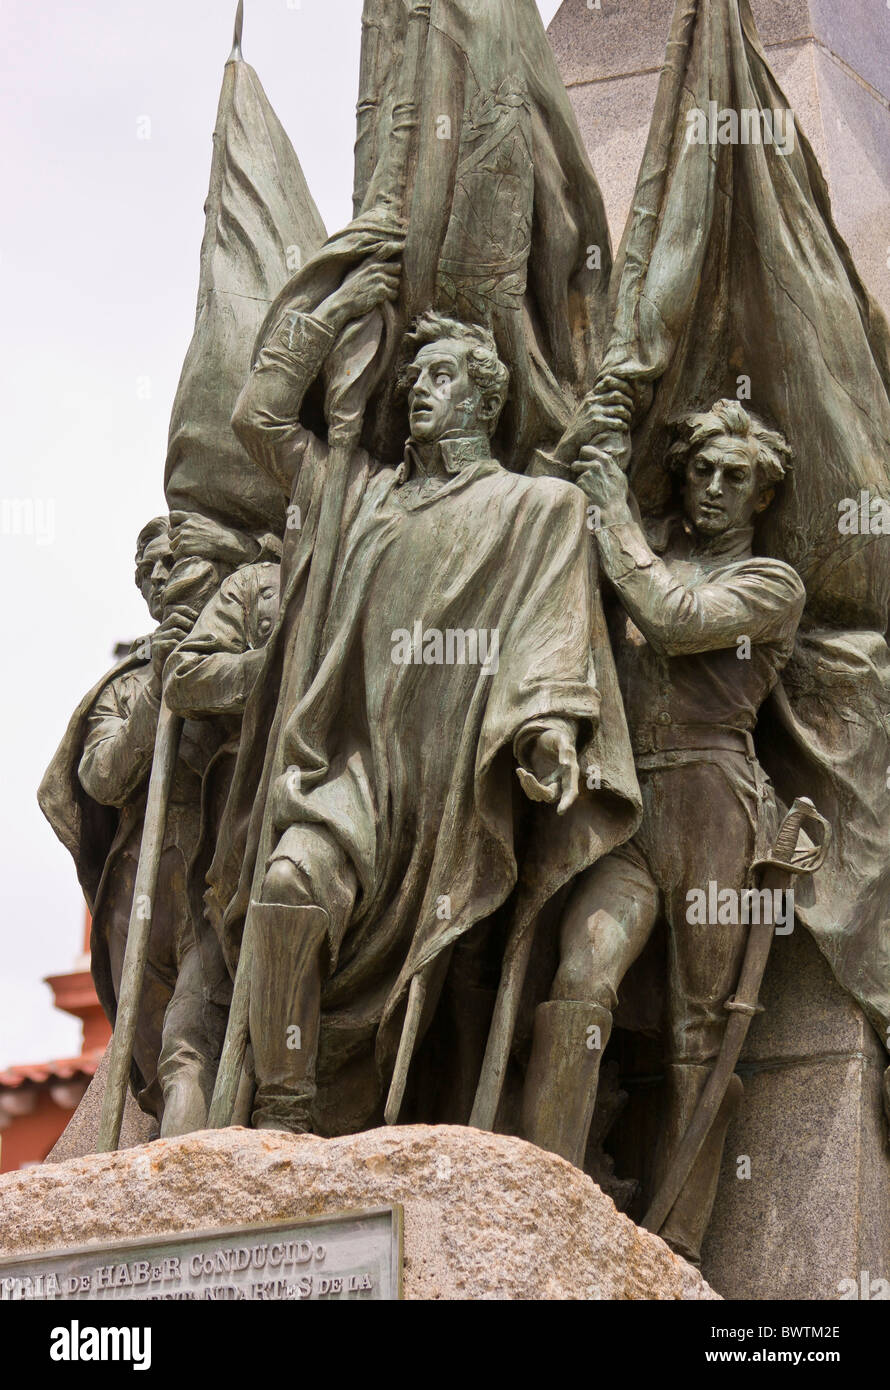 PANAMA CITY, PANAMA - Simon Bolivar statua, Plaza Bolivar, Casco Viejo, centro storico della città. Foto Stock